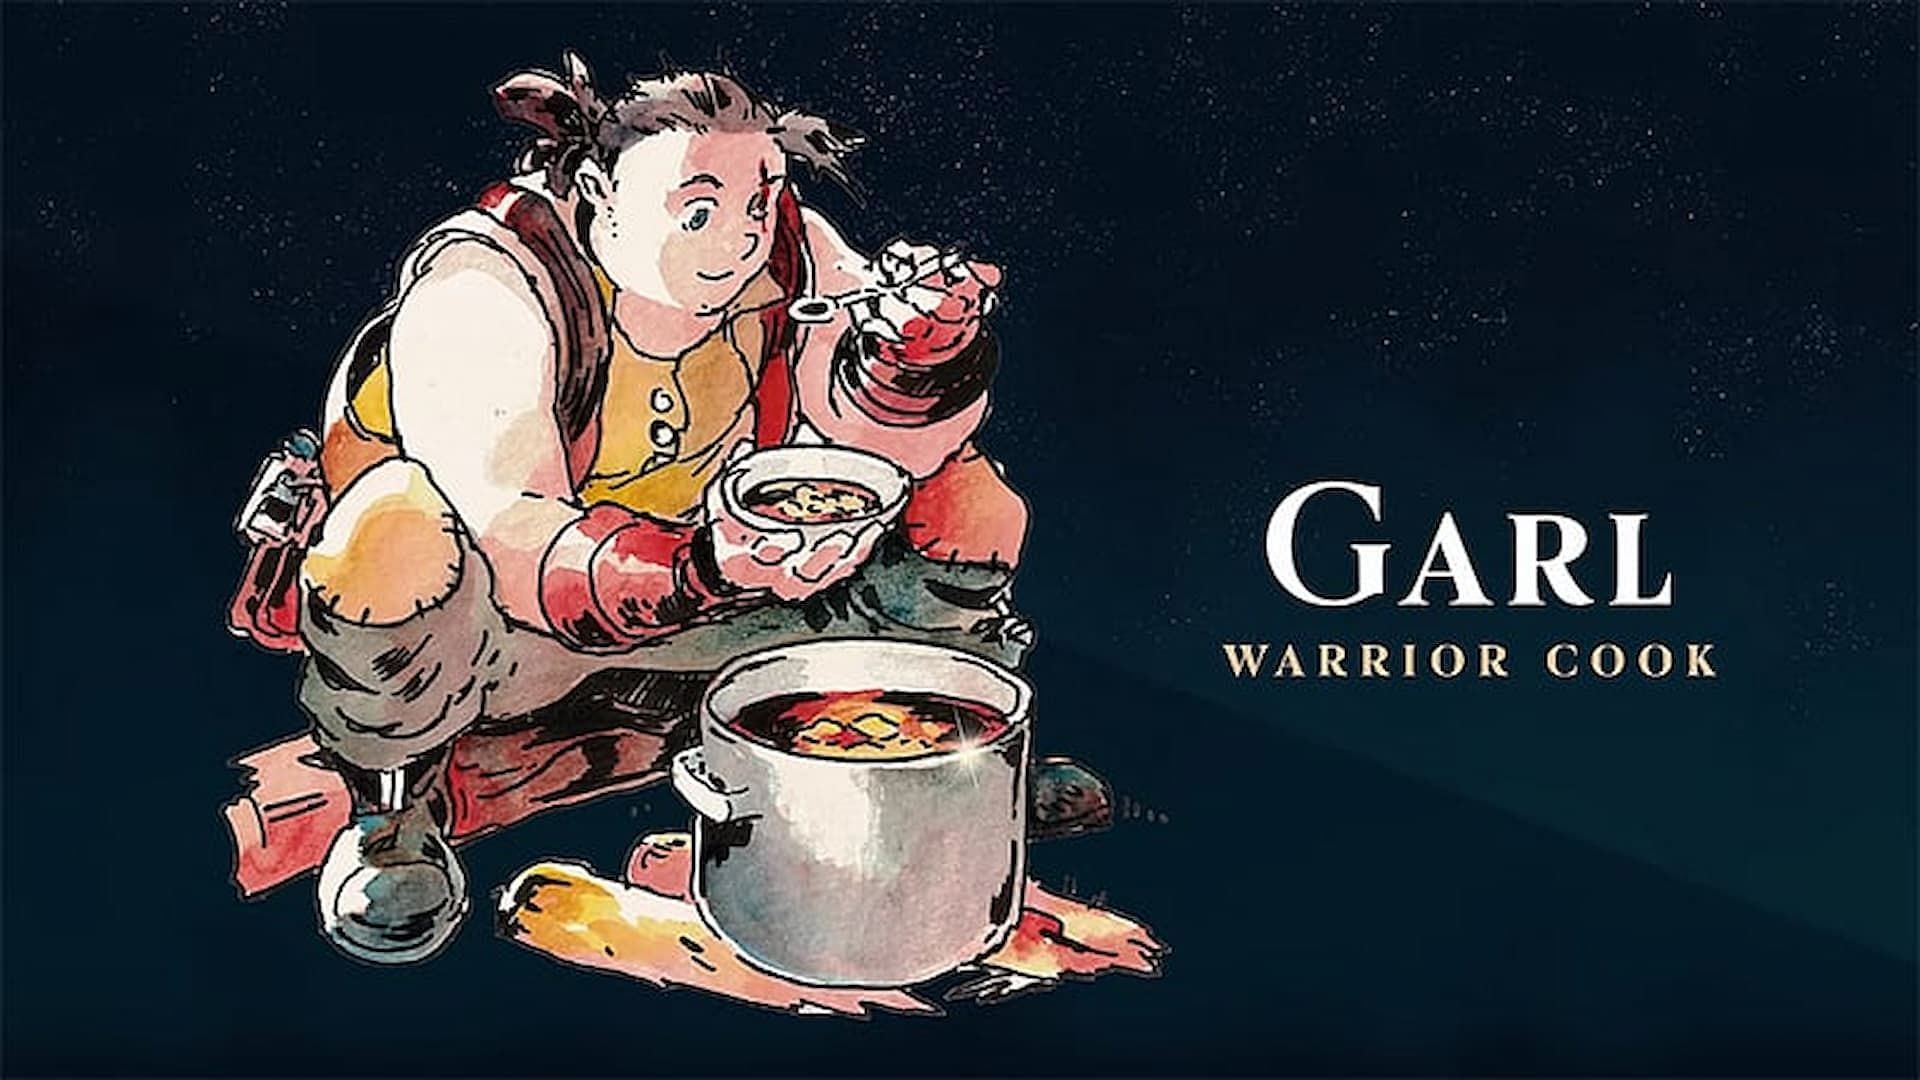 Garl is a warrior cook in the game (Image via Sabotage Studio)